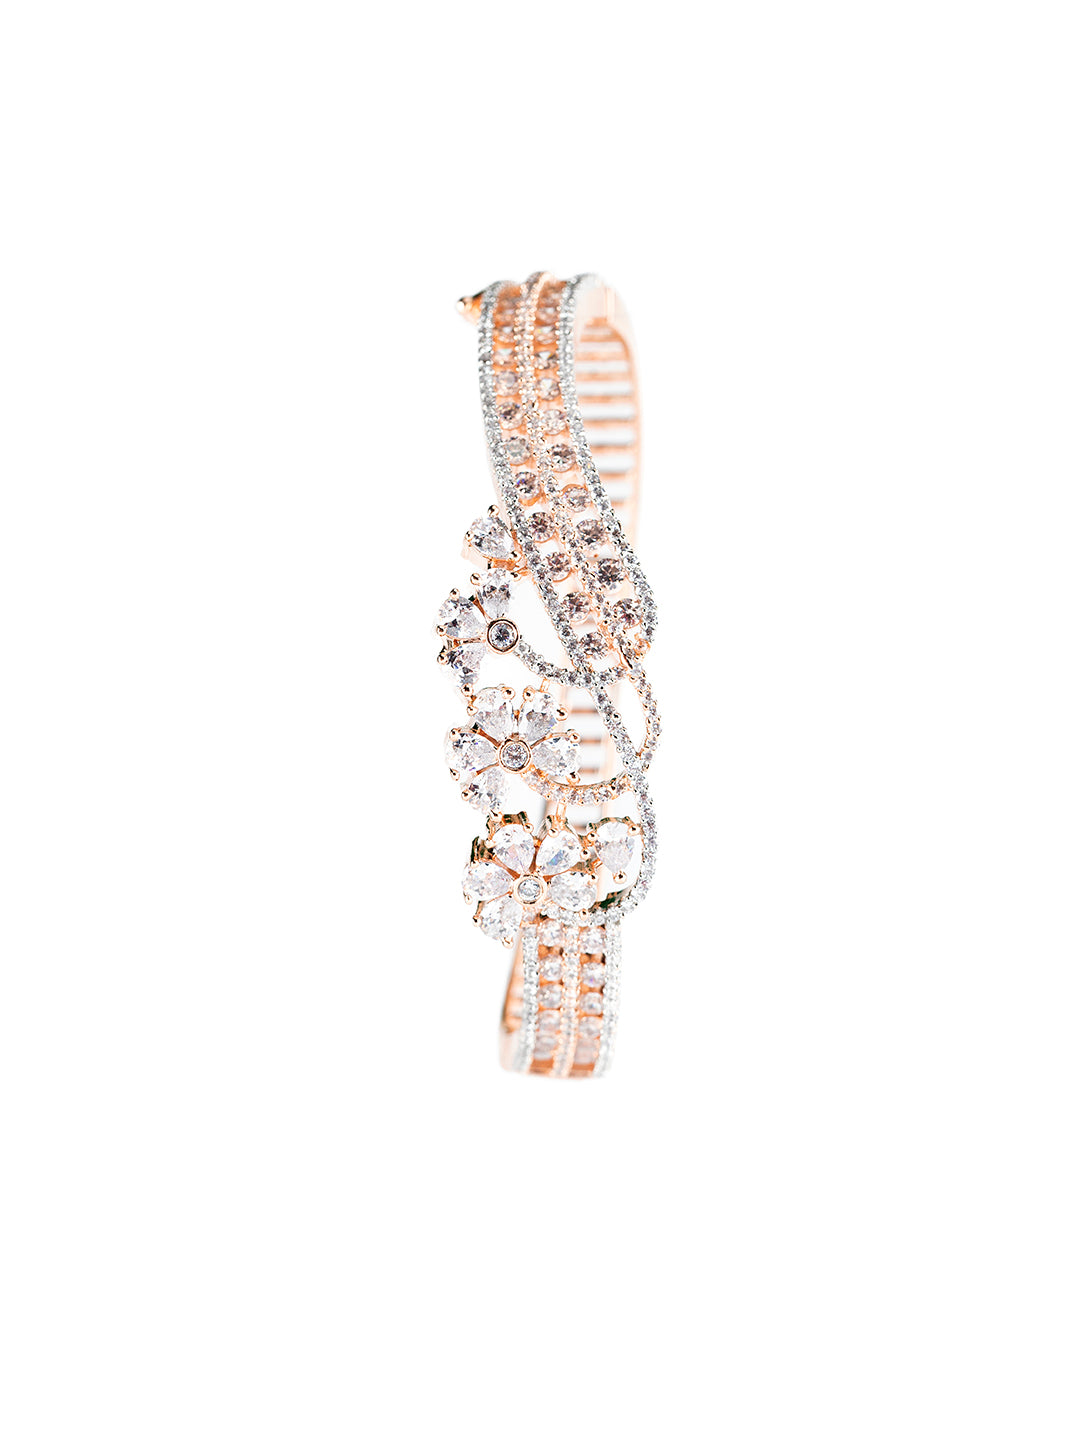 Stunning Floral American Diamond Rose Gold-Plated Bracelet